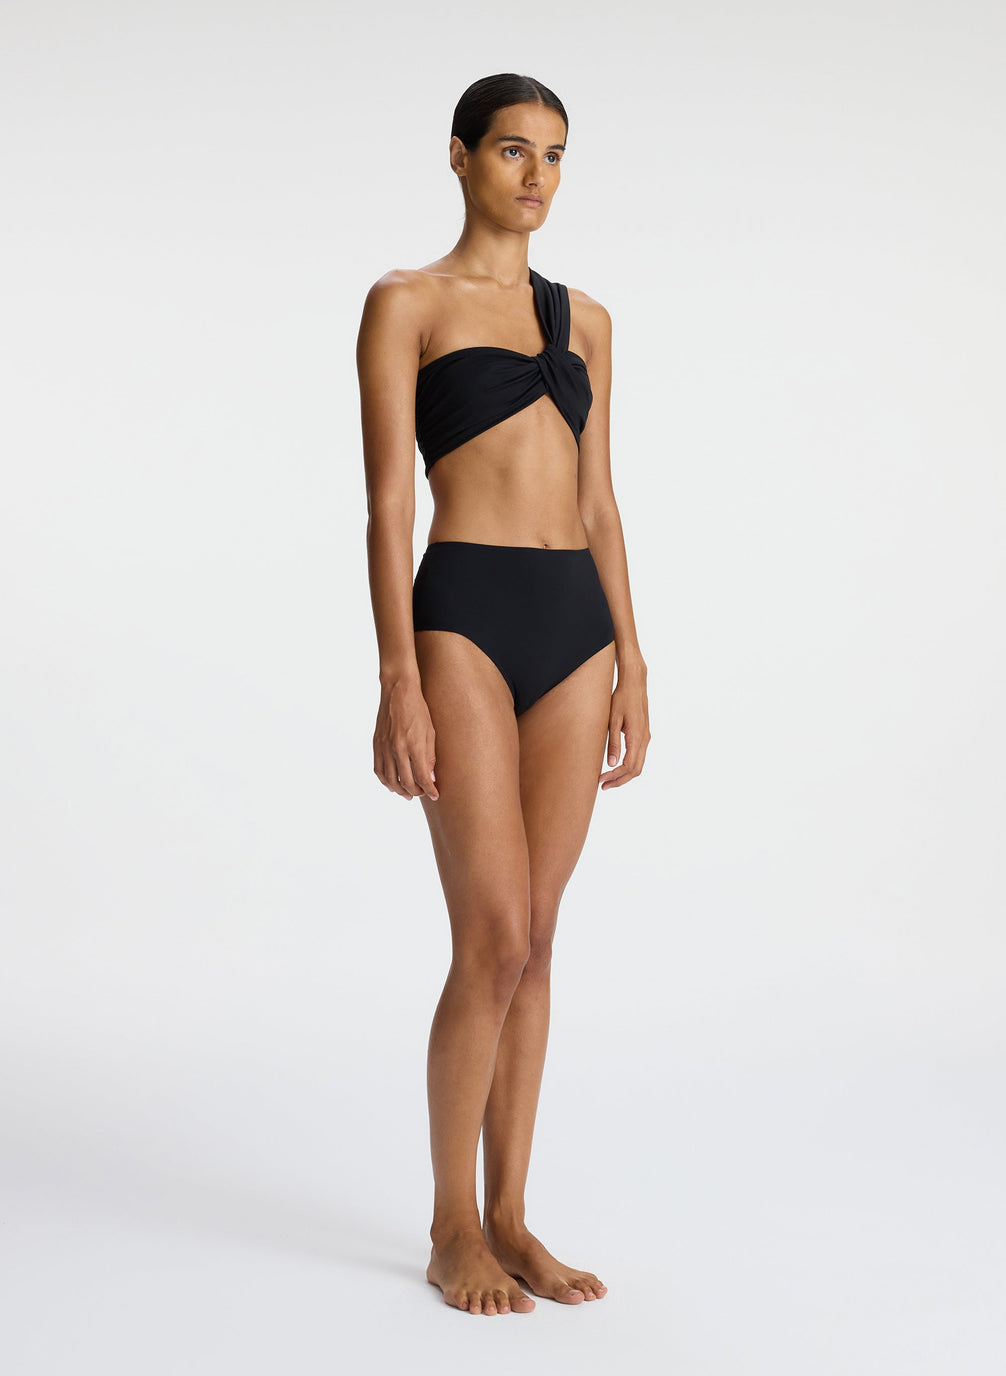 side view of woman wearing black one shoulder swim top and black bikini bottom'